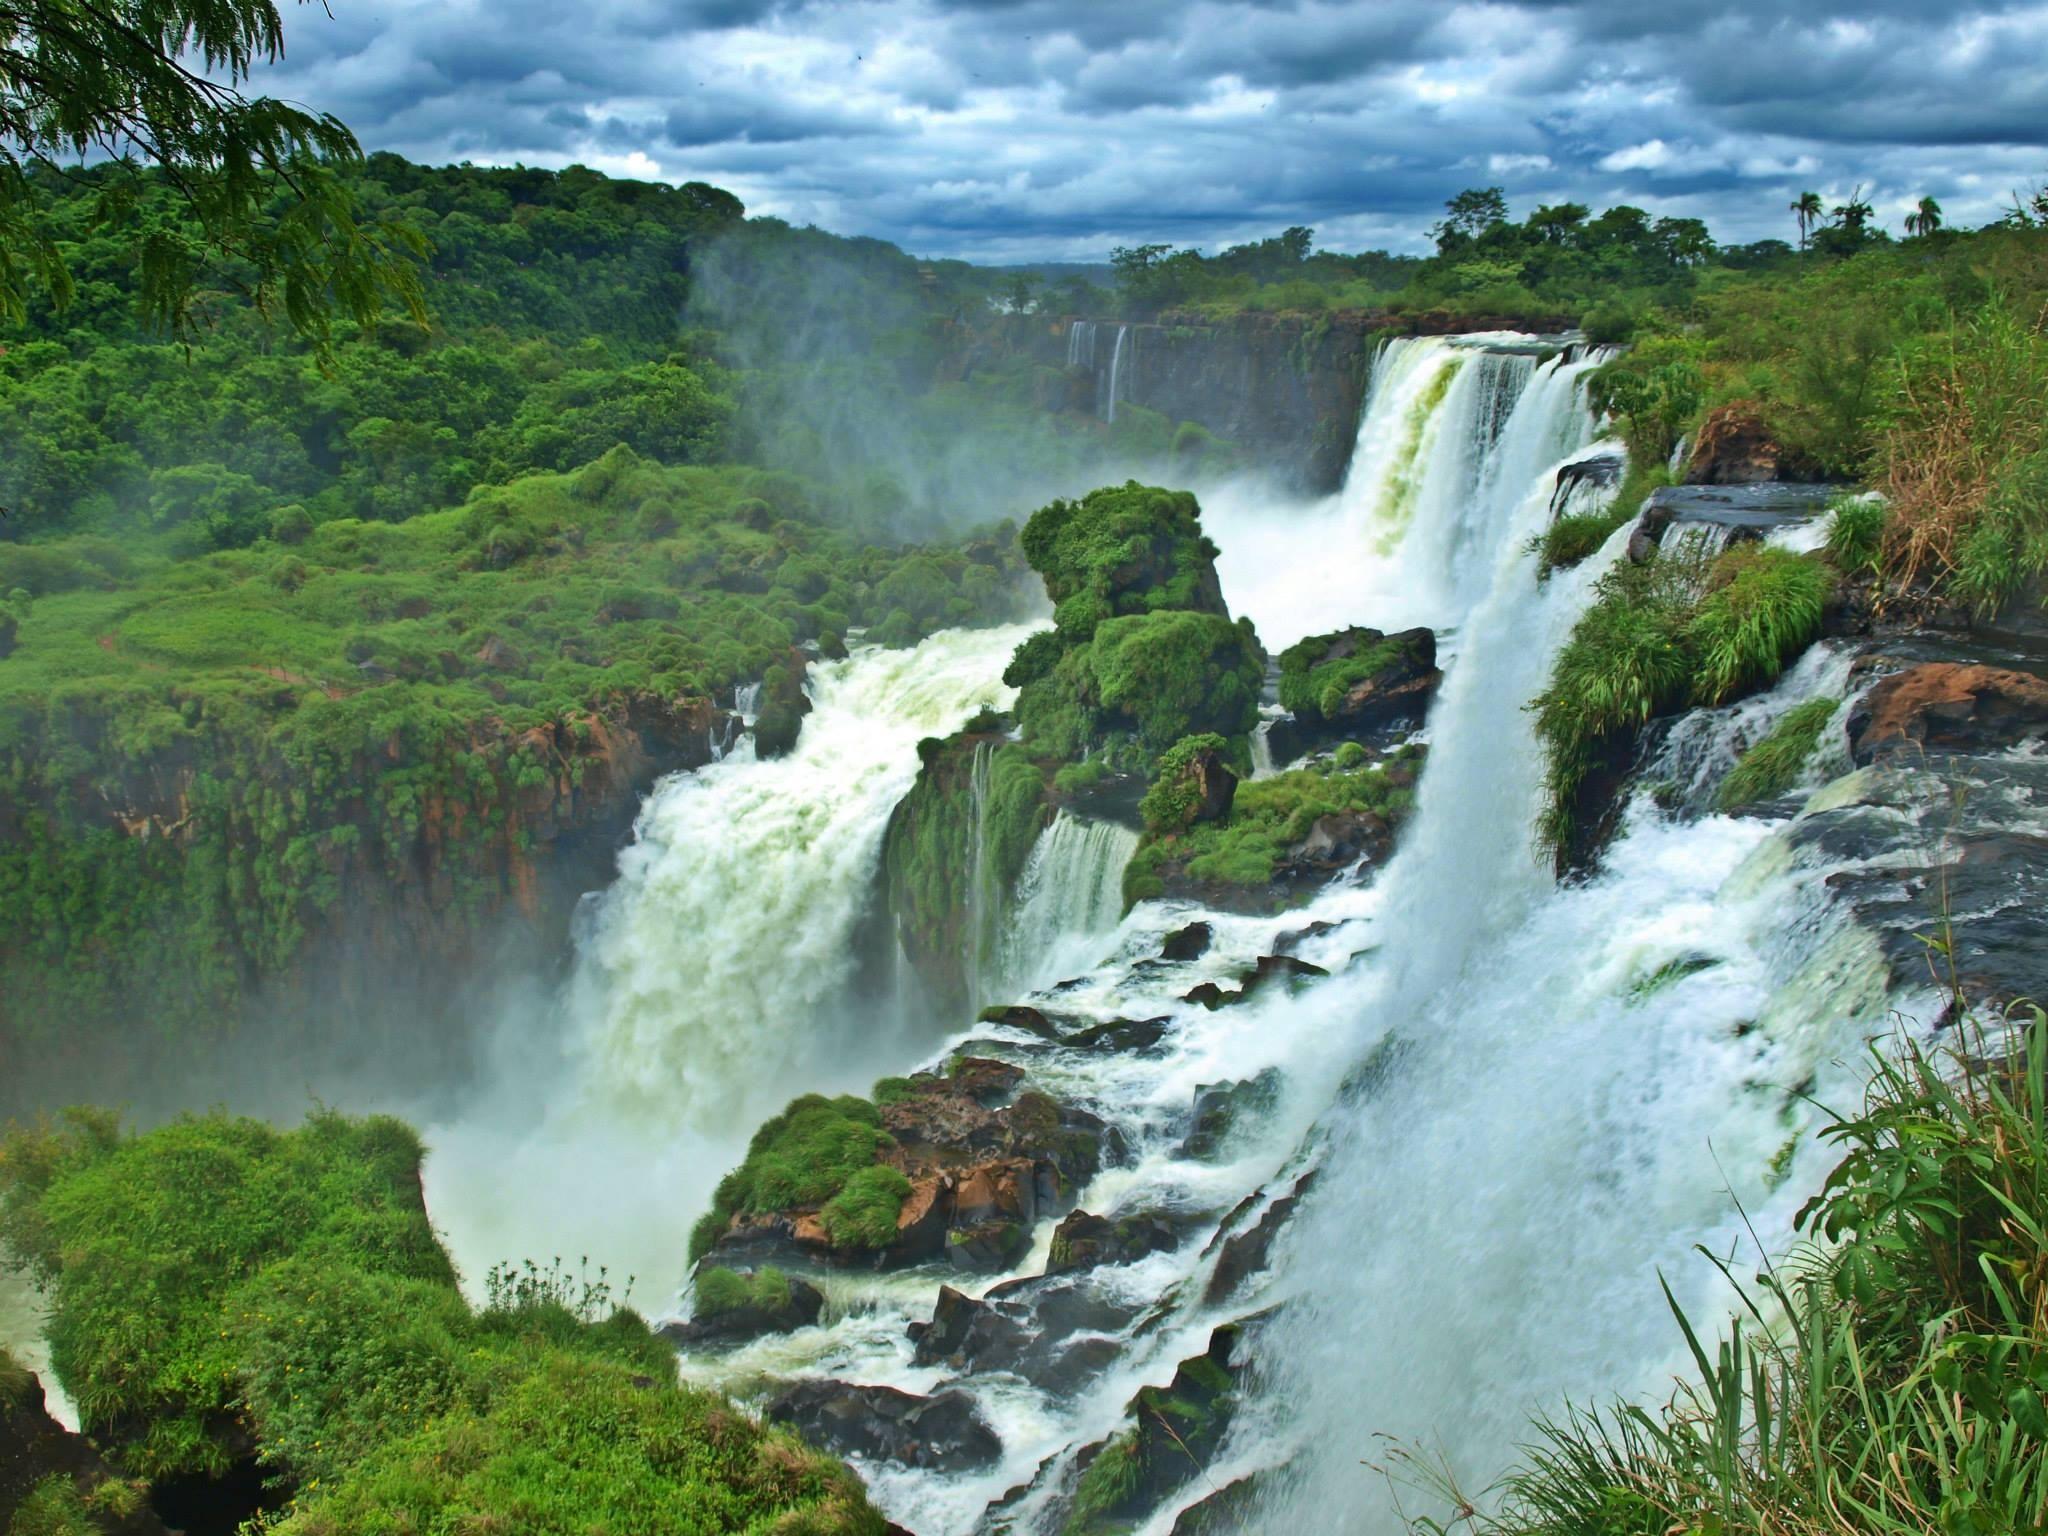 Природные объекты бразилии. Парк Игуасу, Аргентина/Бразилия. Нац парк Игуасу Аргентина. Национальный парк Игуасу, Бразилия / Аргентина. Национальный парк Игуасу водопады.